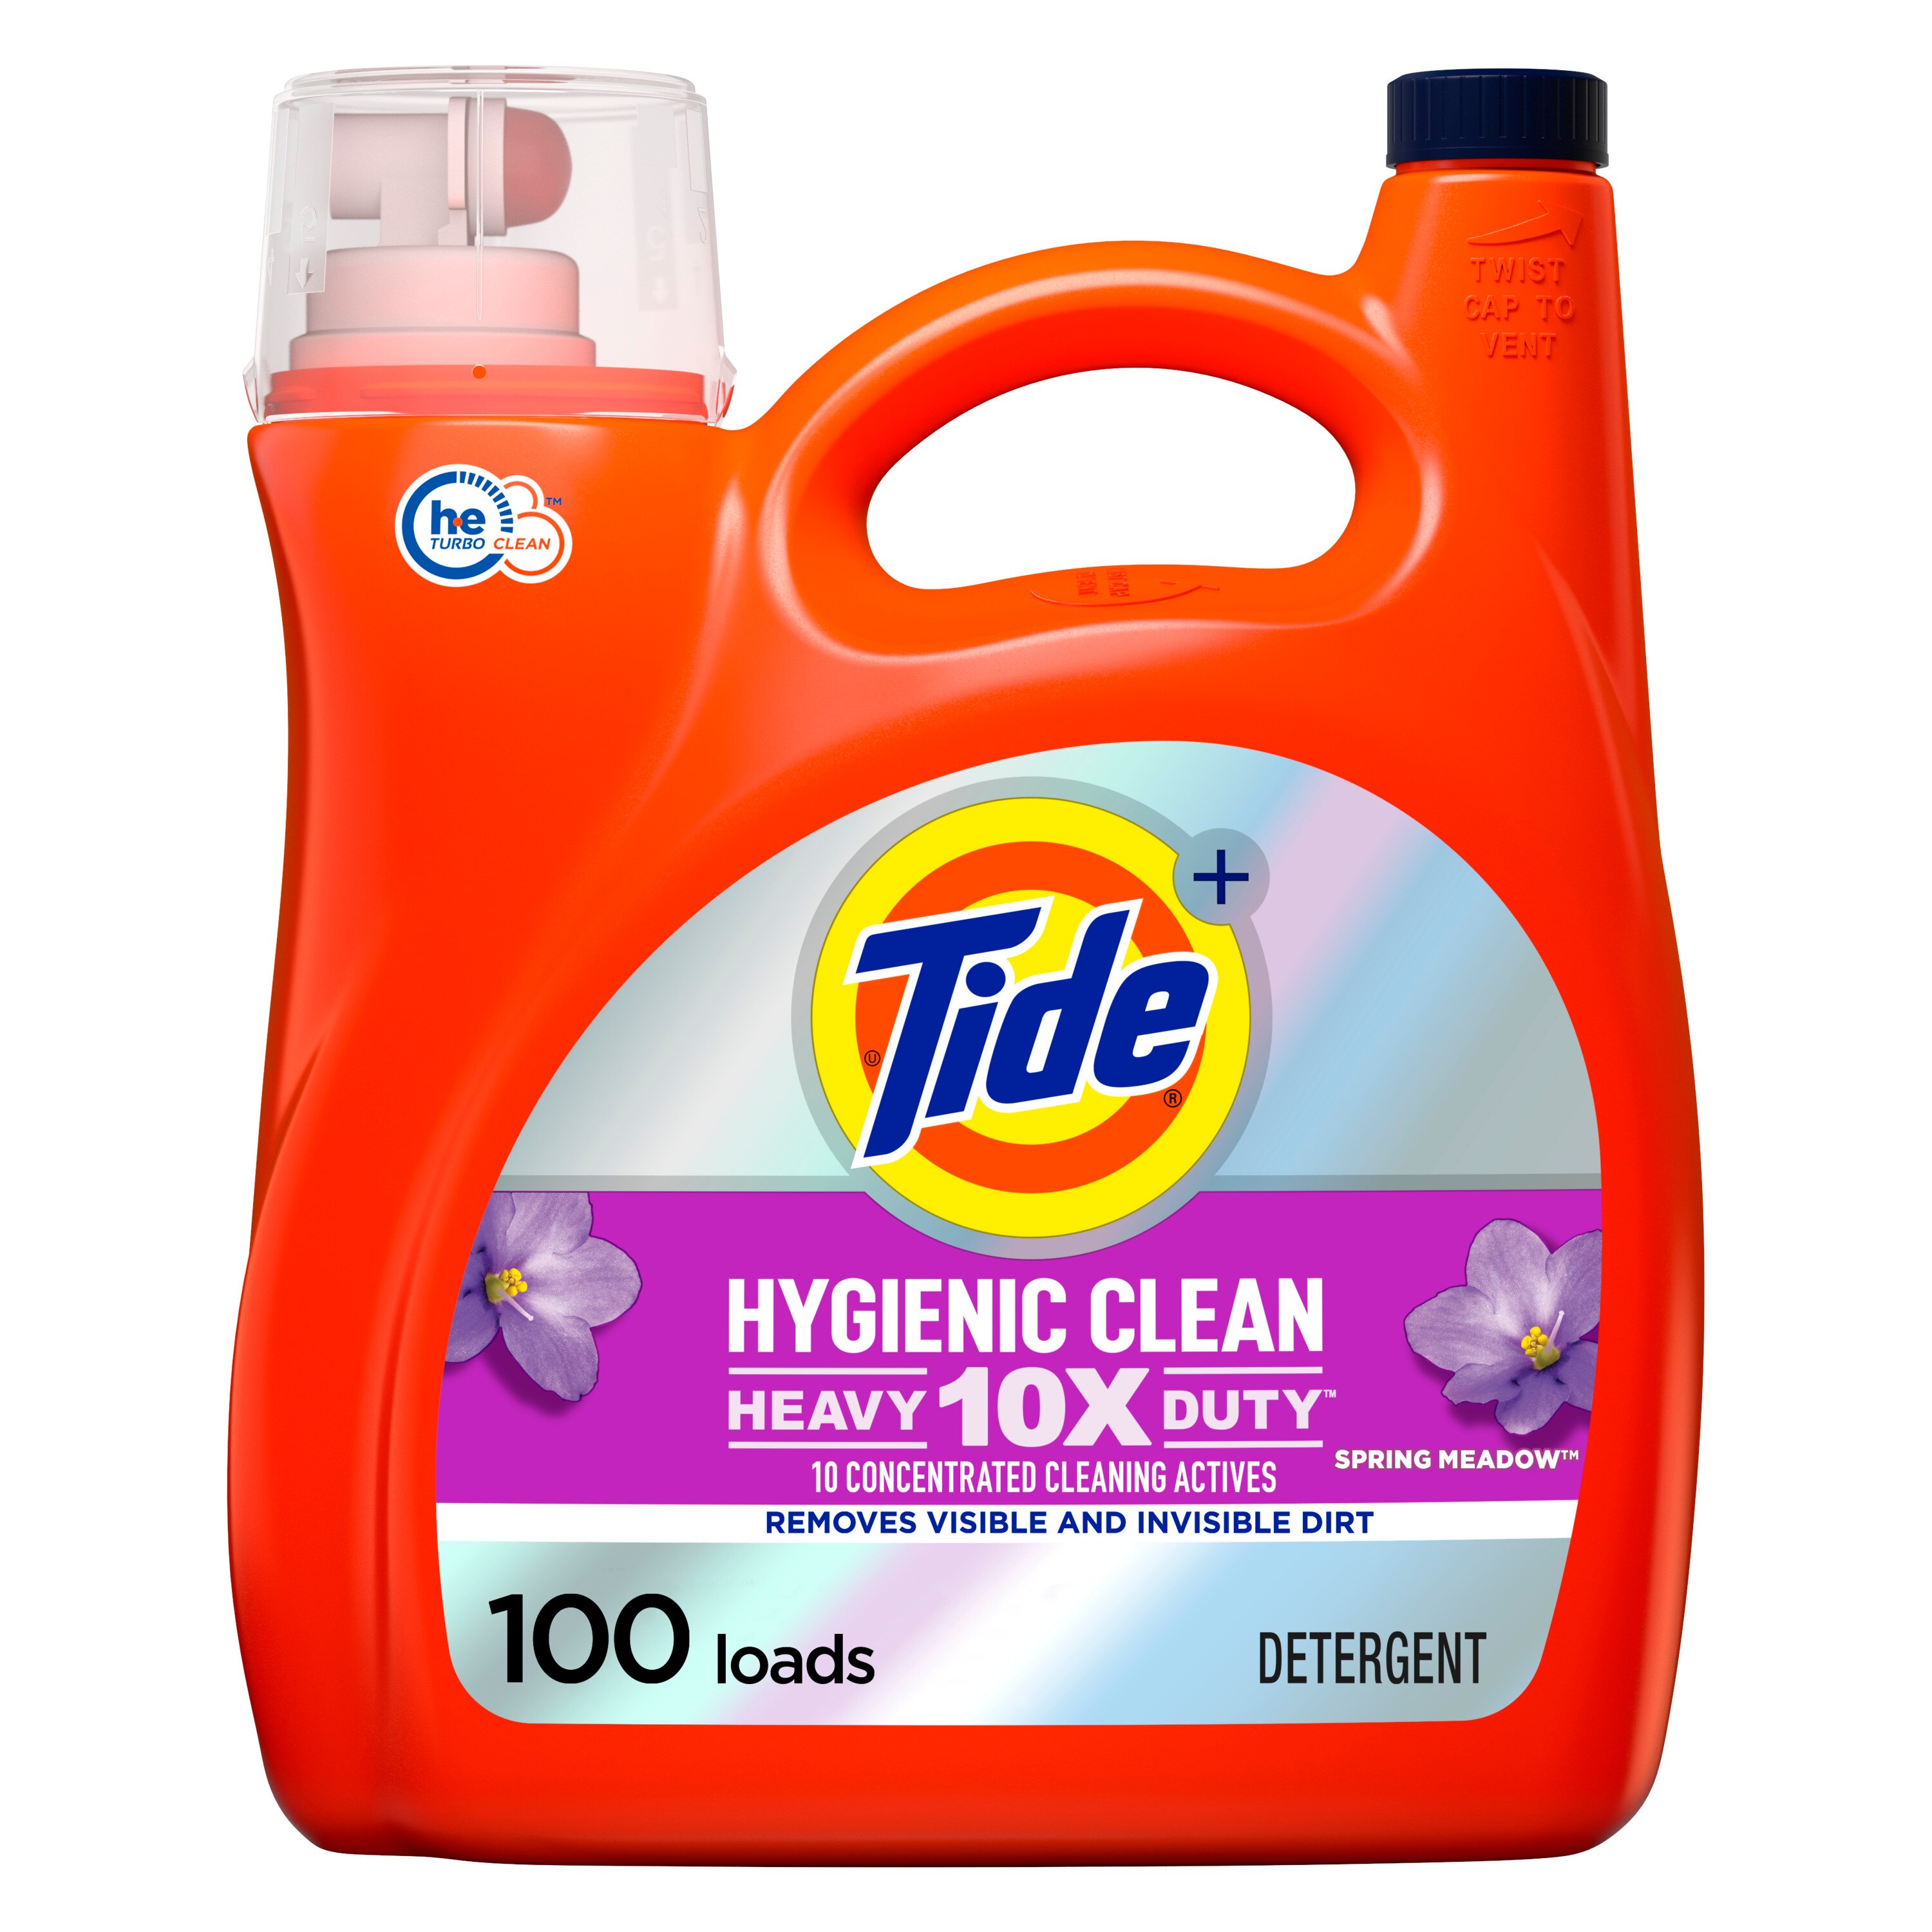 Tide Hygienic Clean Heavy 10x Duty Liquid Laundry Detergent, Spring Meadow, 100 Loads, 154 fl oz, HE Compatible